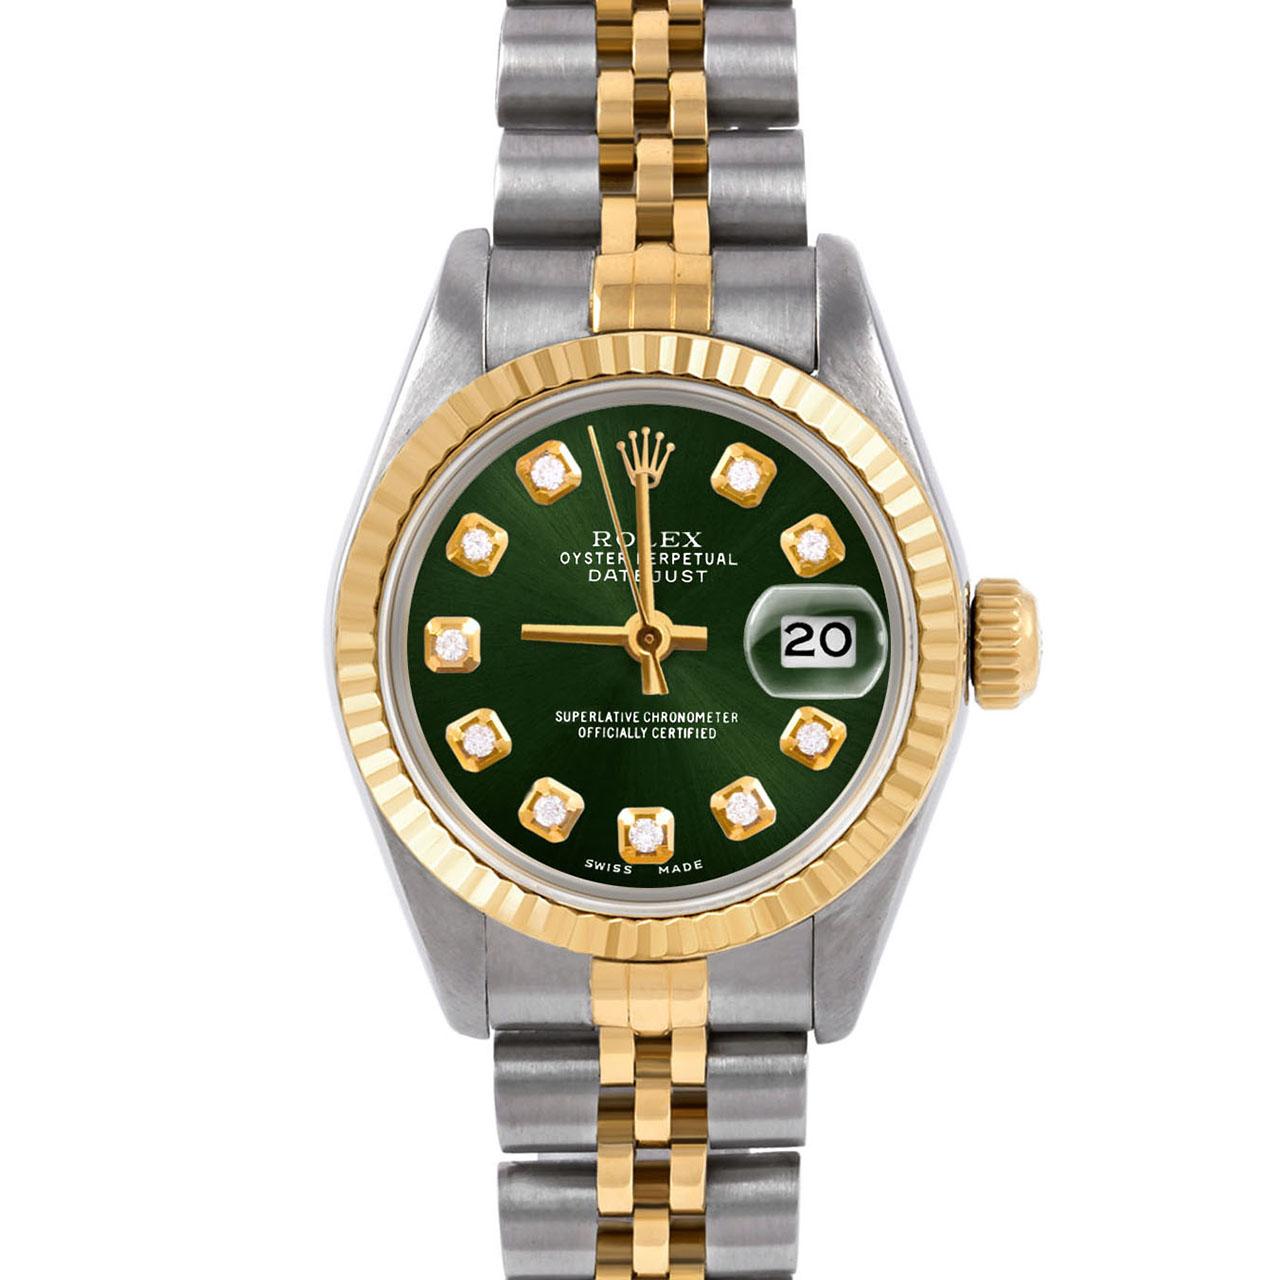 Swiss Wrist - SKU 6917-TT-GRN-DIA-AM-FLT-JBL

Brand : Rolex
Model : Datejust (Non-Quickset Model)
Gender : Ladies
Metals : 14K/Stainless Steel
Case Size : 26 mm

Dial : Custom Green Diamond Dial (This dial is not original Rolex And has been added